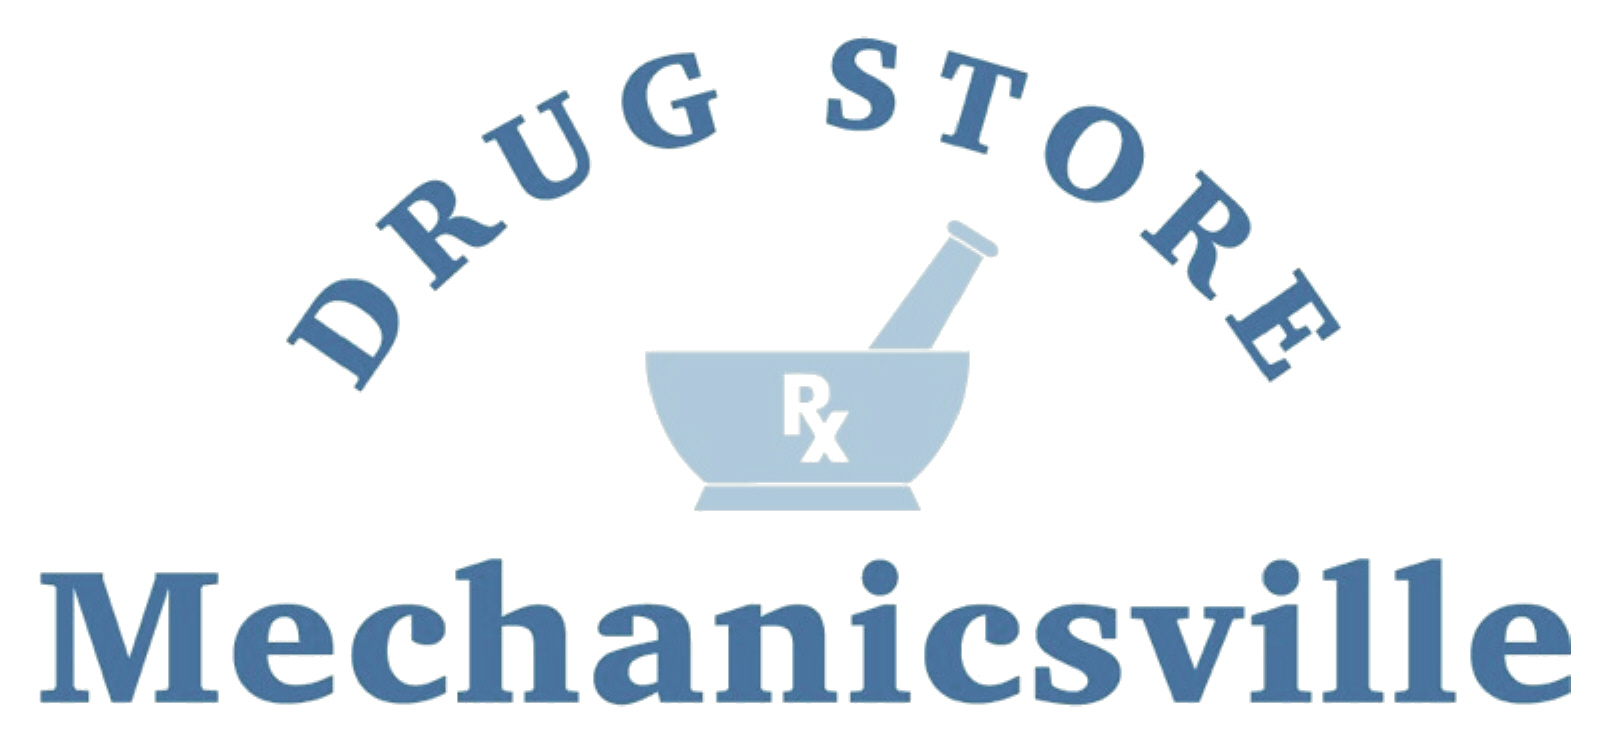 Mechanicsville Drug Store